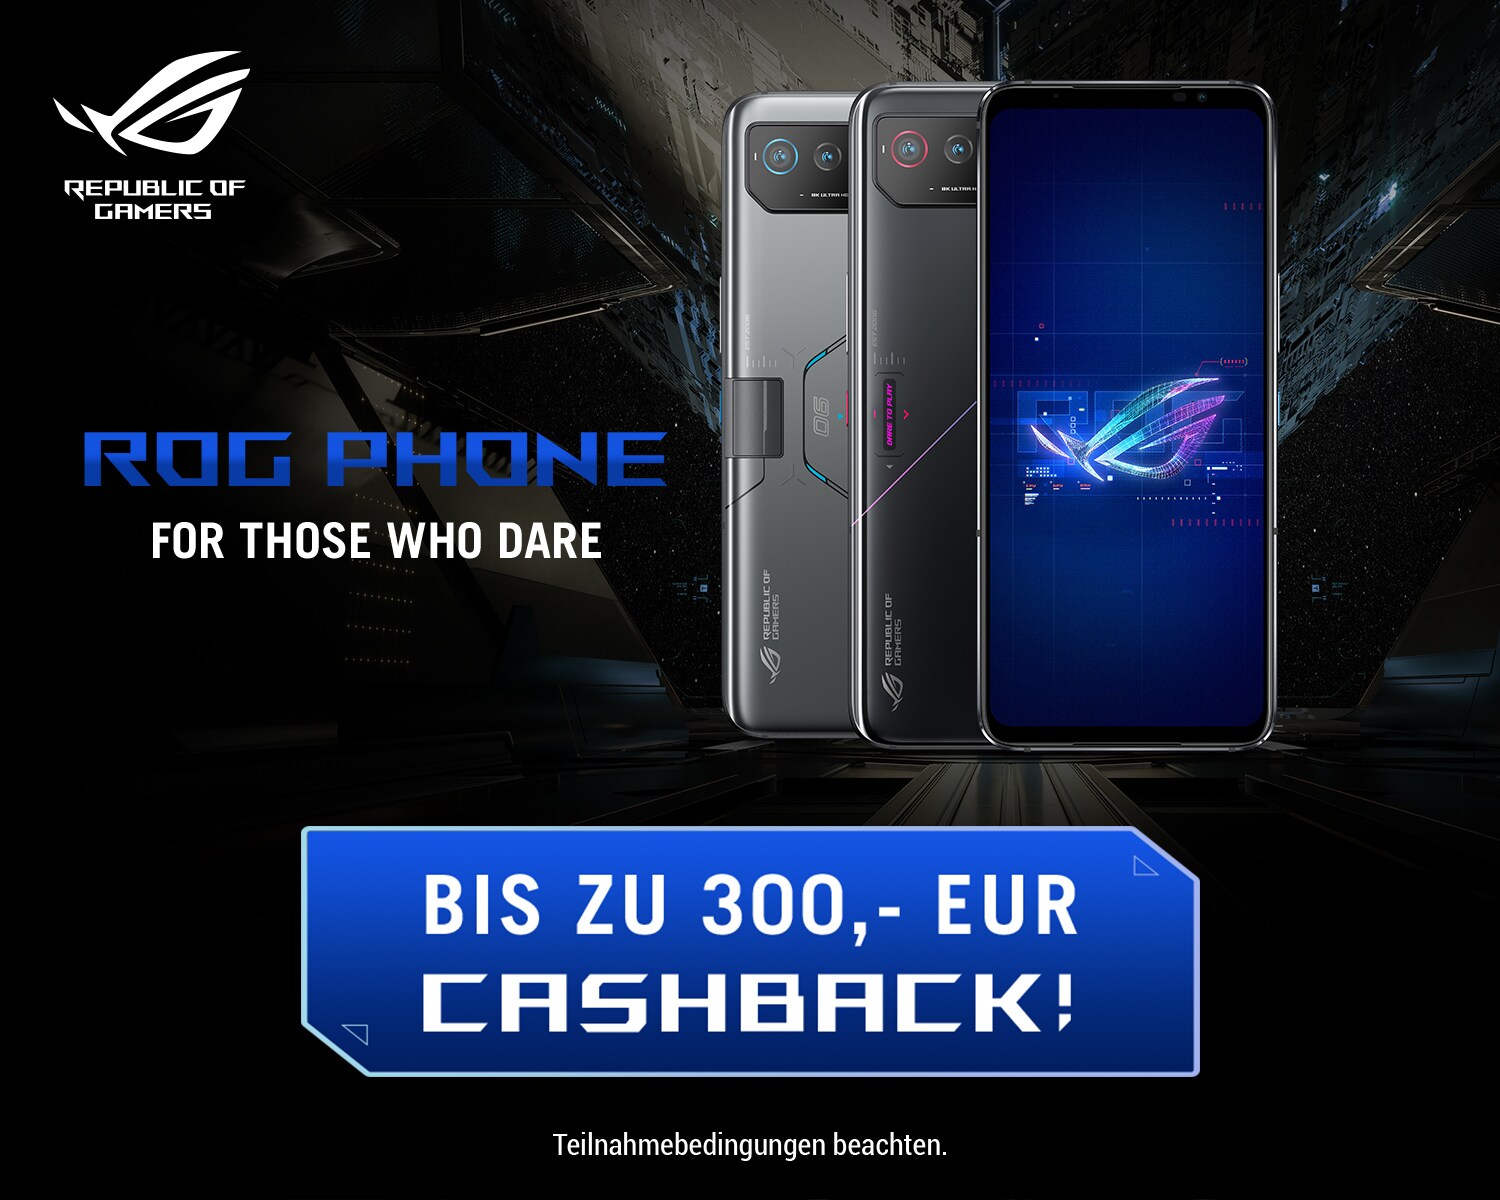 Phone ROG Smartphone ASUS 5G ++ phantom 6 12.0 Android black Cyberport 16/512GB